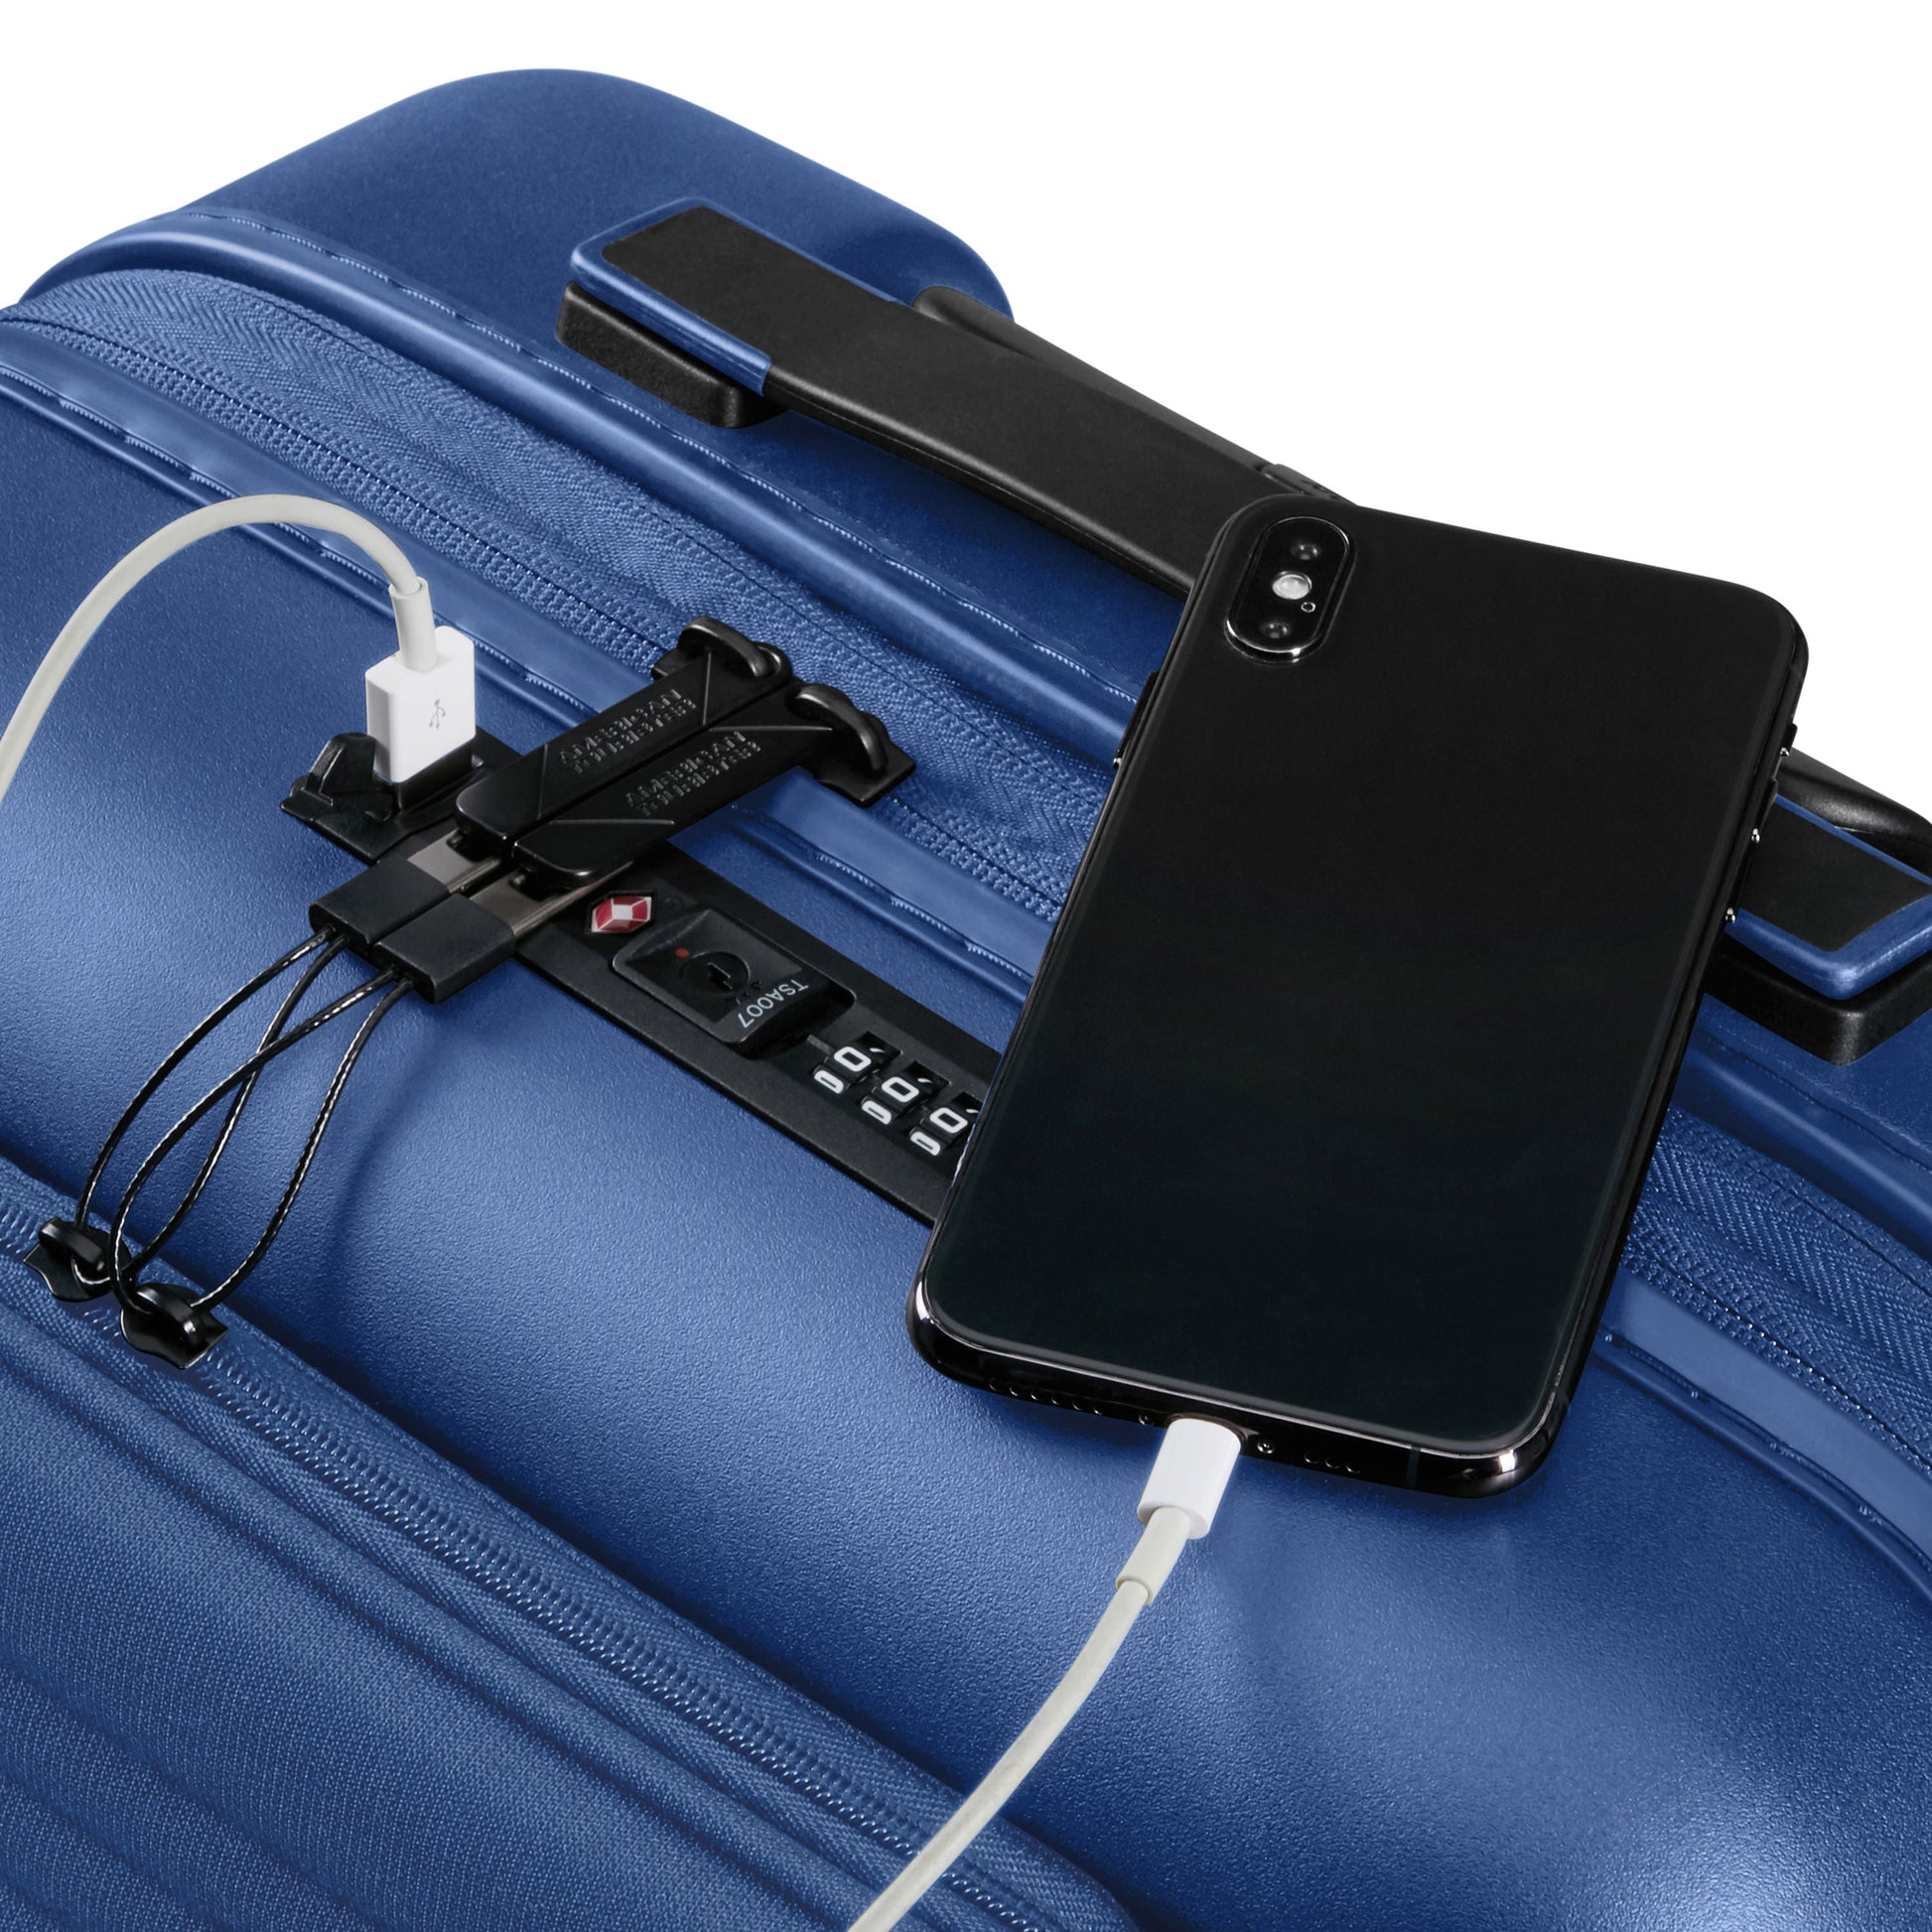 American Tourister Novastream 3-Piece Expandable Luggage Set